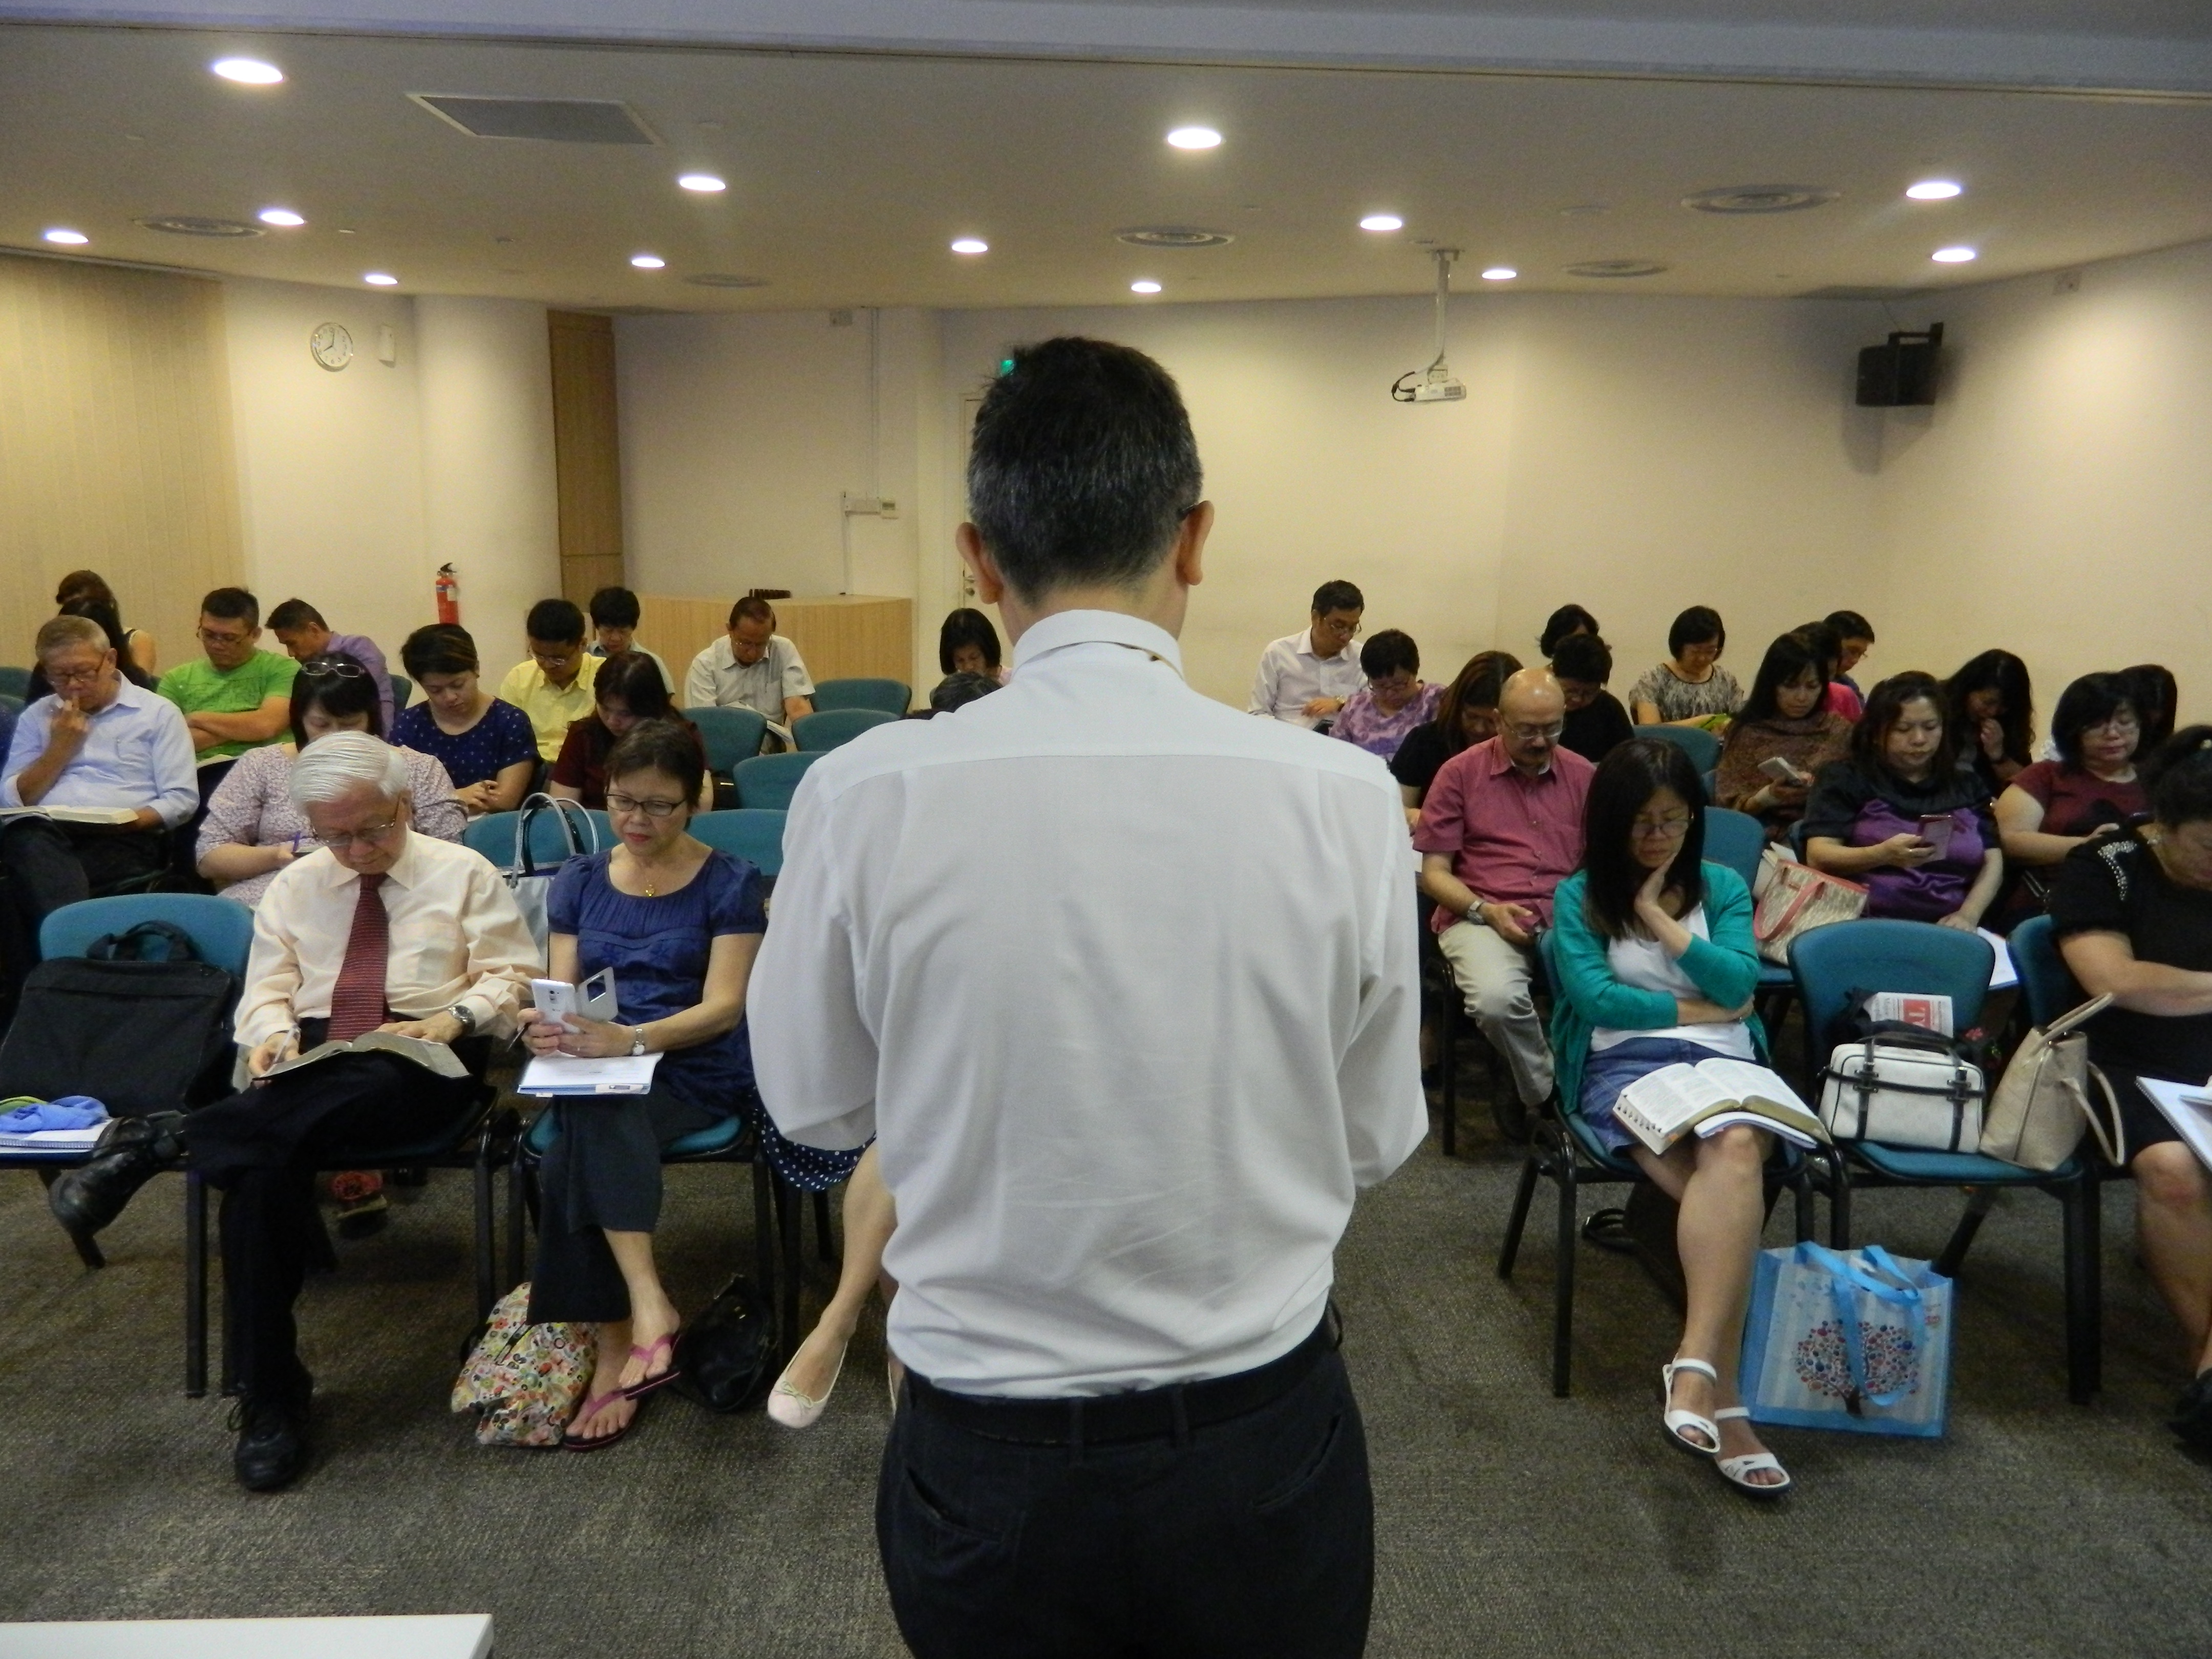 bible study fellowship singapore 2014